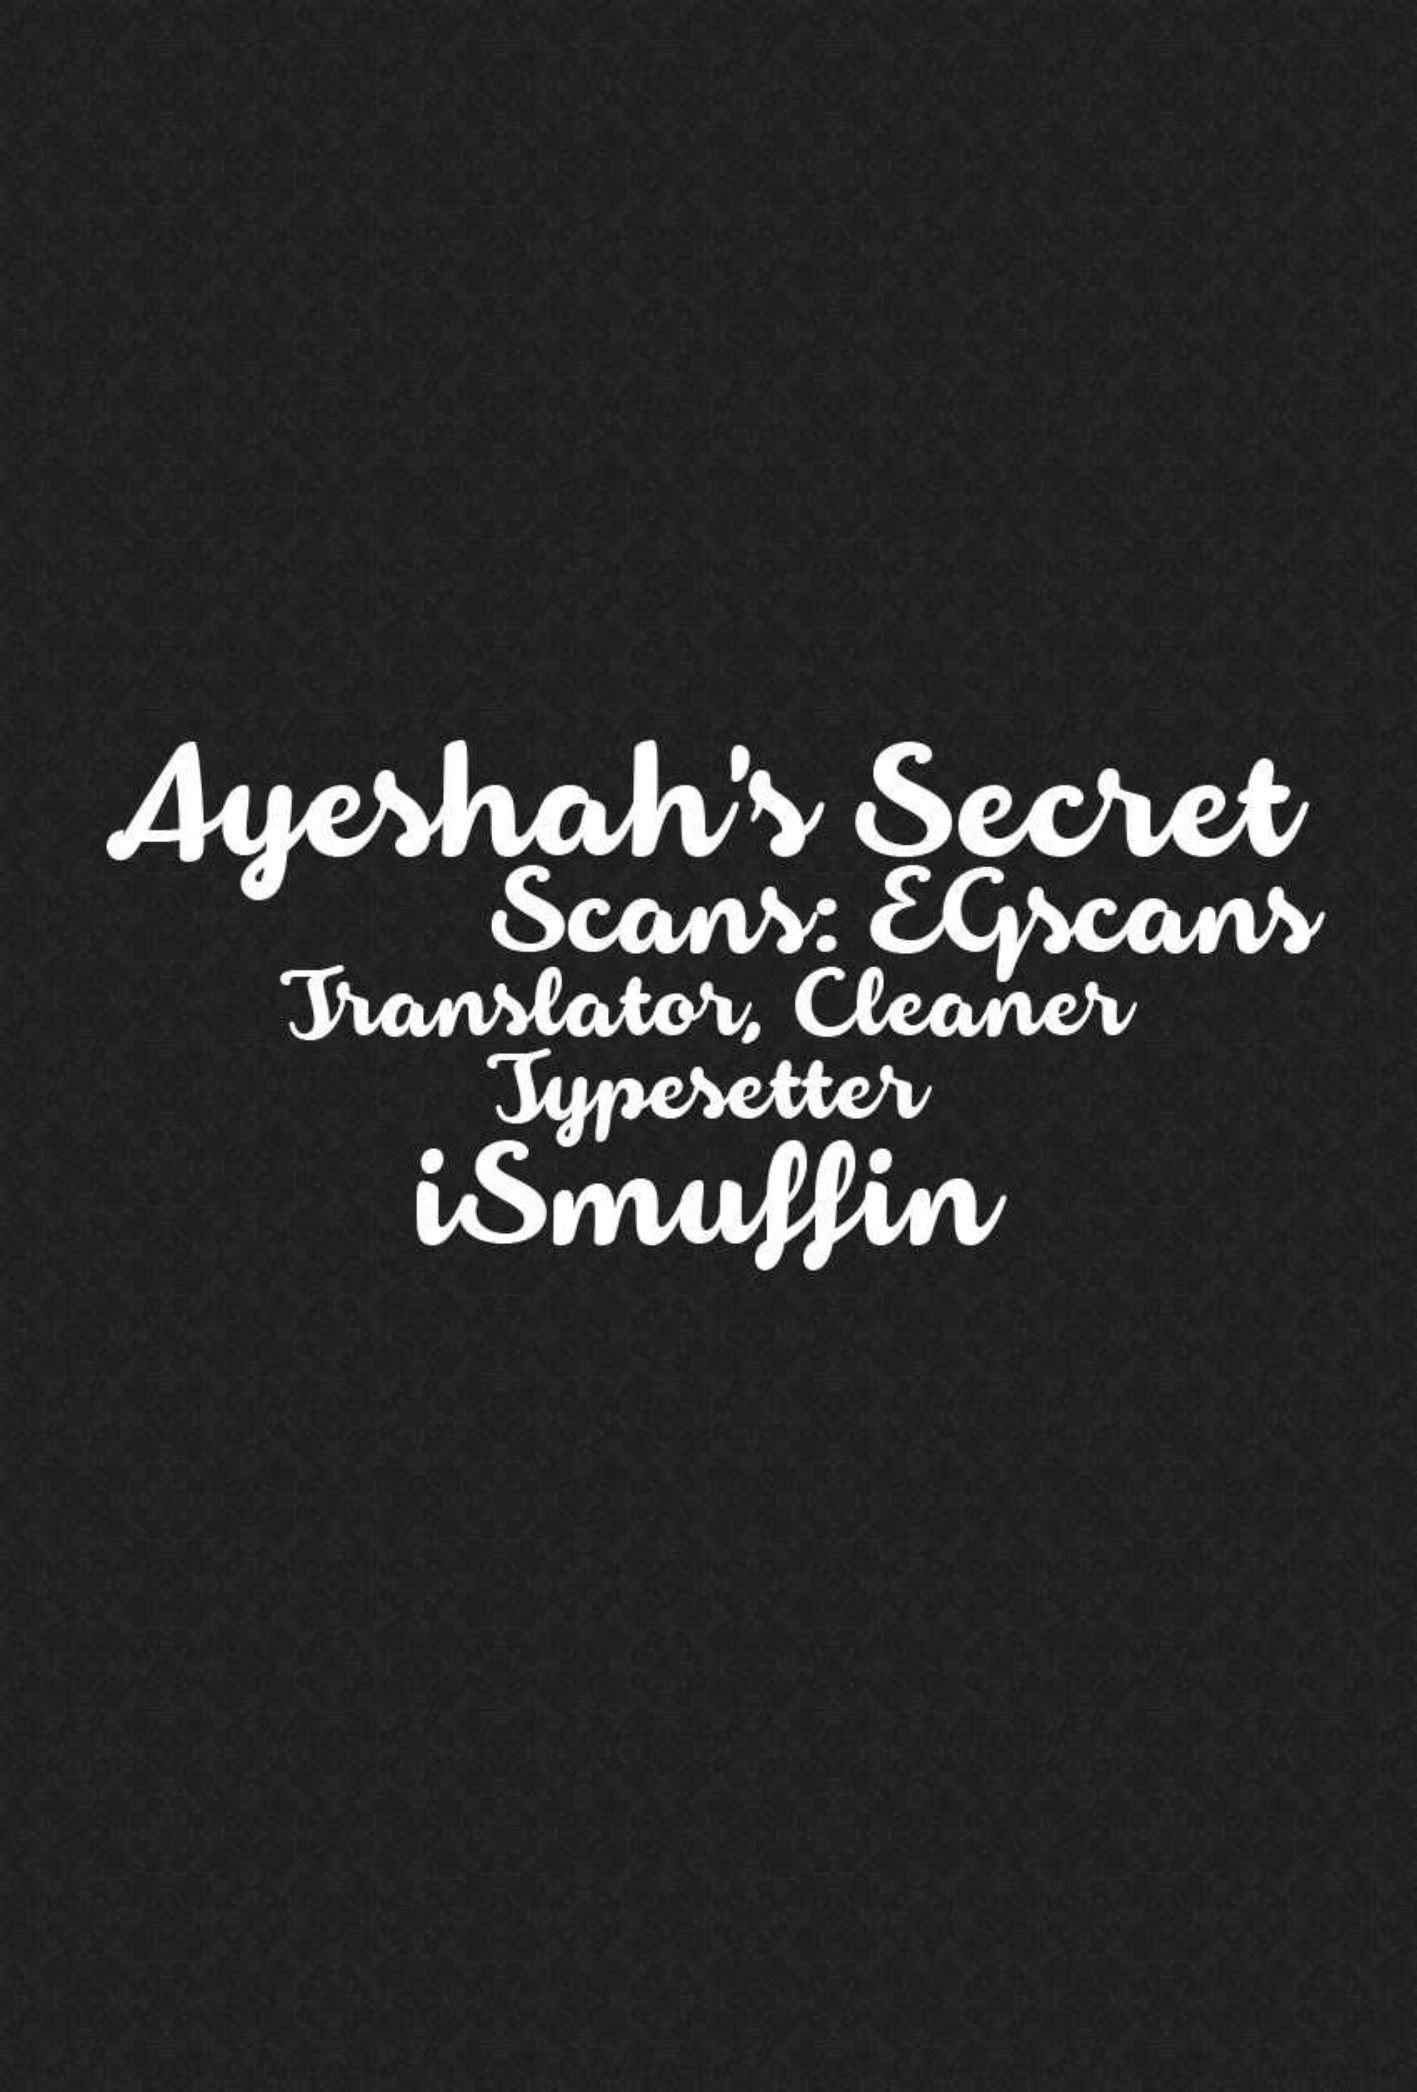 Ayeshah's Secret